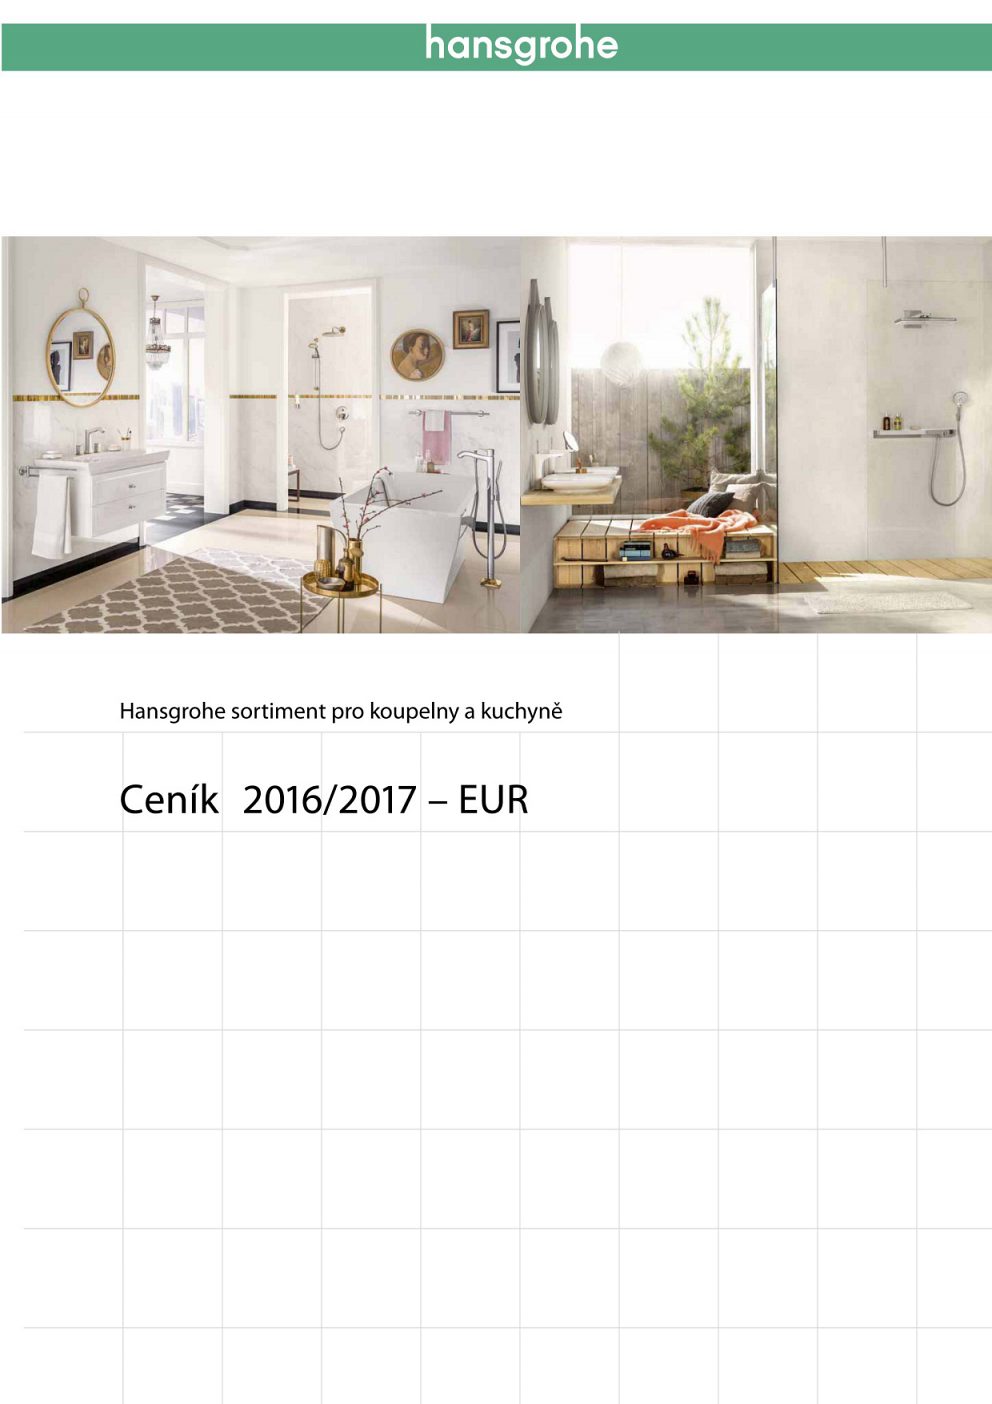 Hansgrohe - Generálny cenník 2016/2017